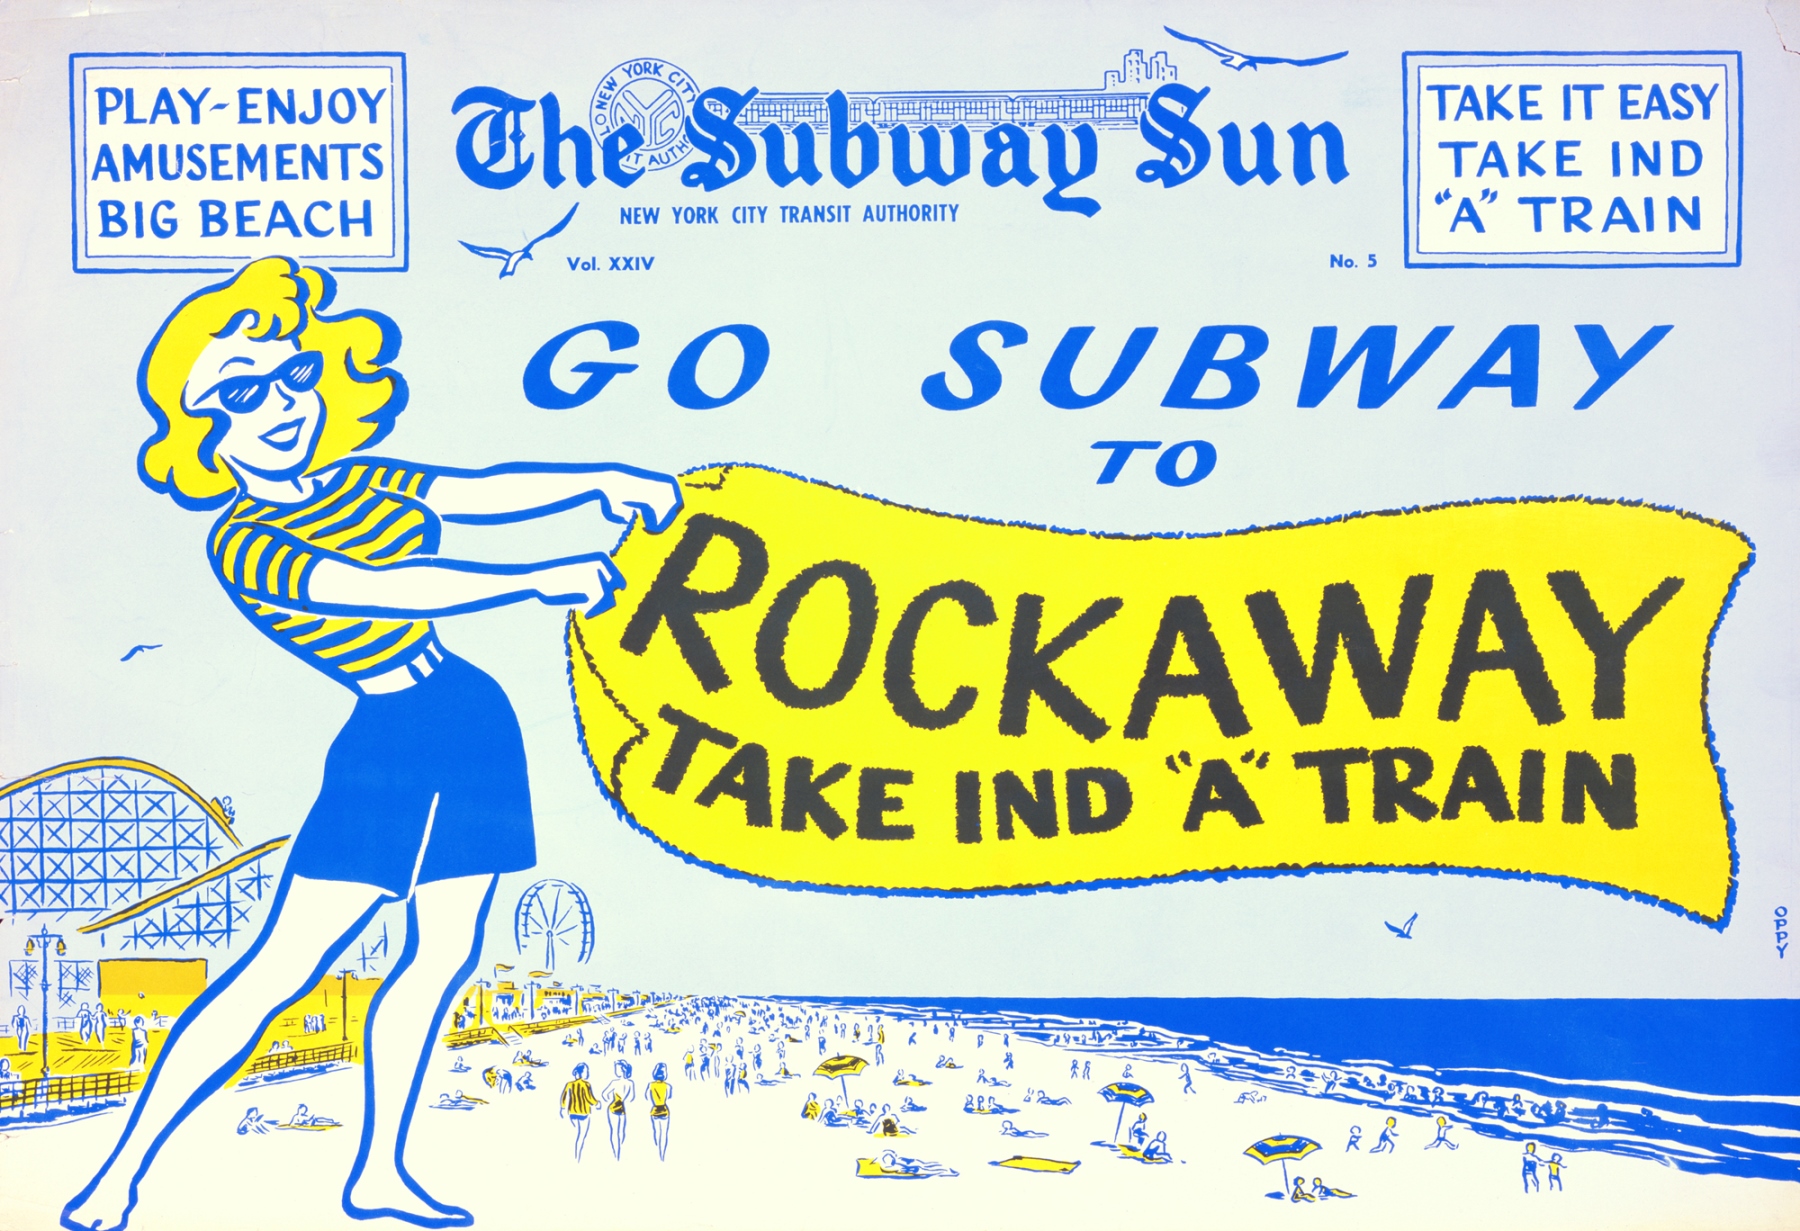 Vintage Subway Sun Advertisement, reads "Go Subway to Rockaway! Take IND "A" Train"